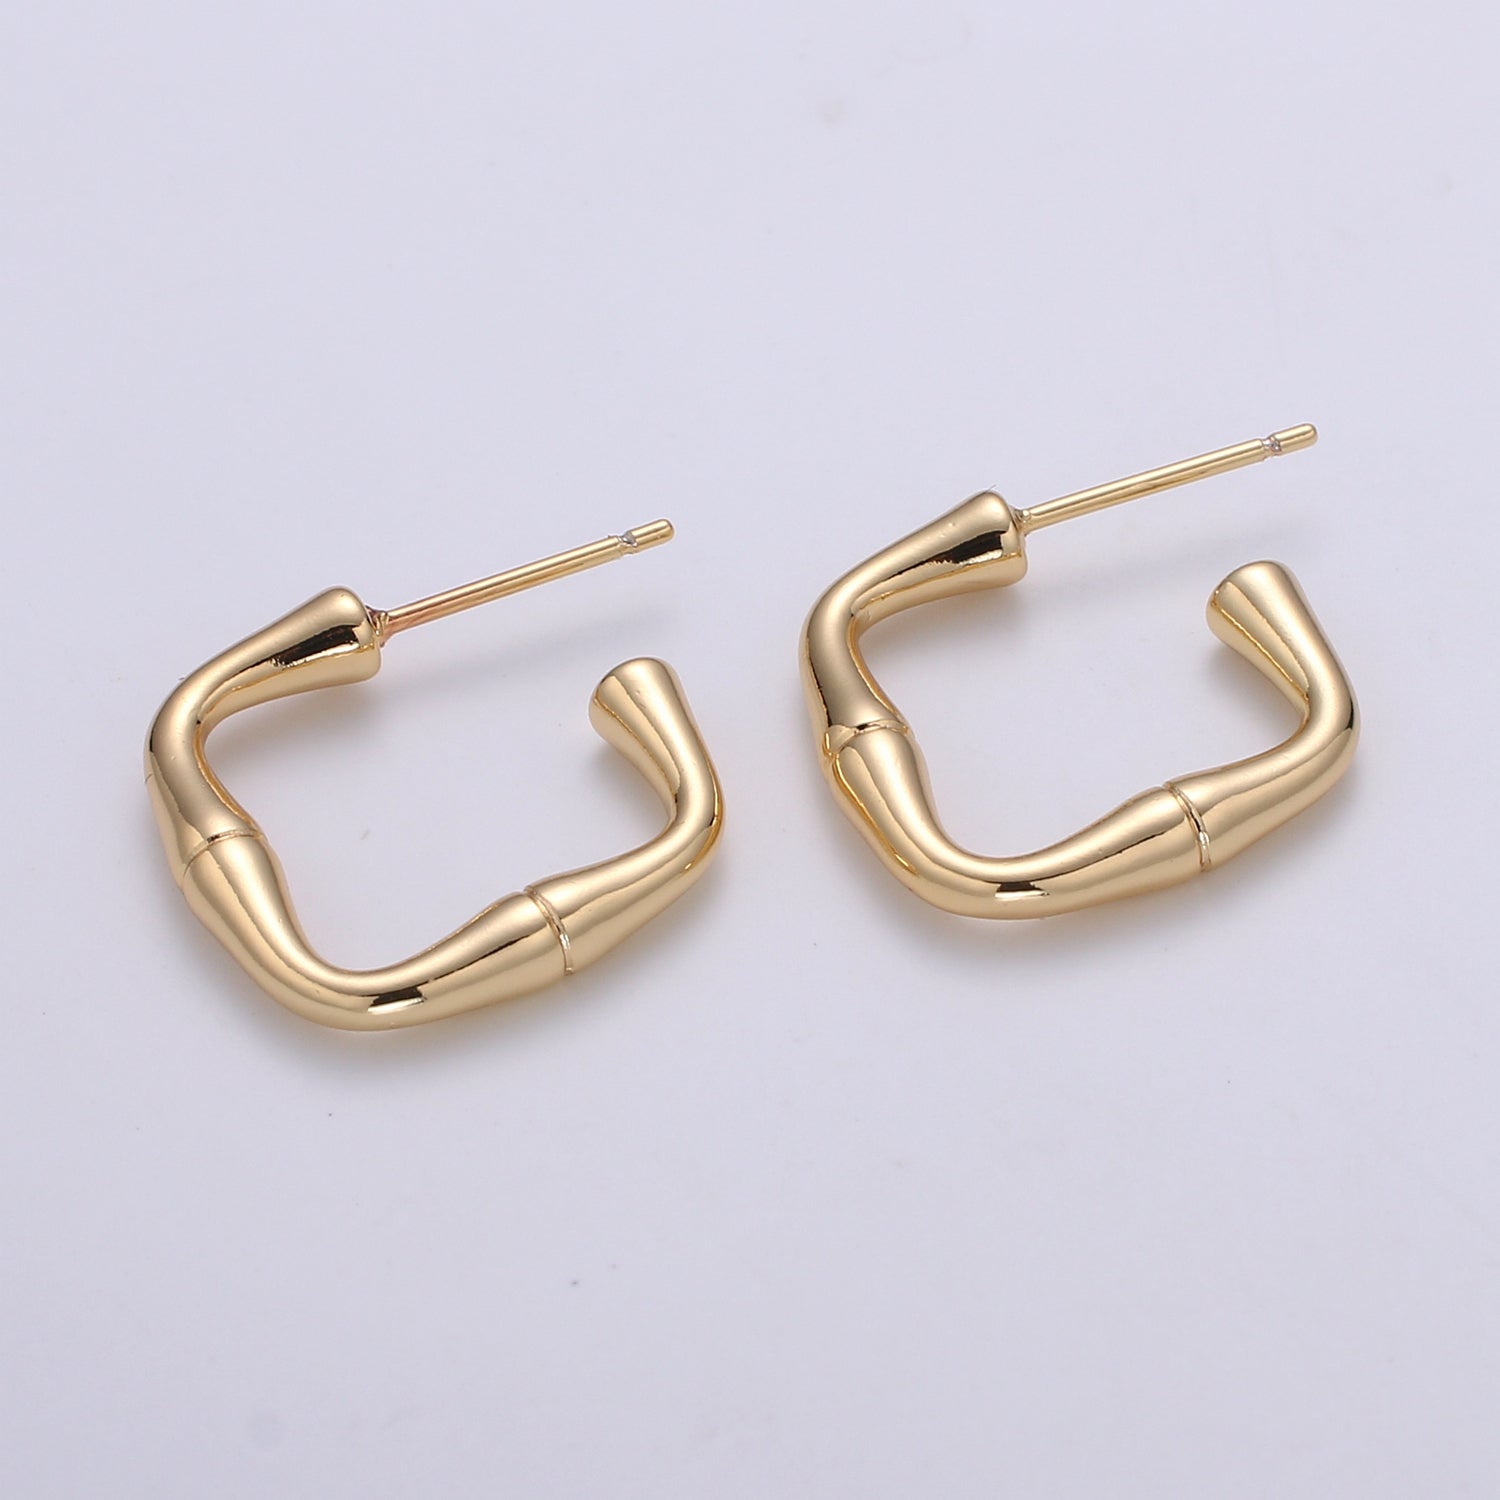 Gold Plated Mini Square Linked Bar Studs Earring Dainty Geometric Tube Bar Plain Gold Earring Jewelry GP-880 - DLUXCA